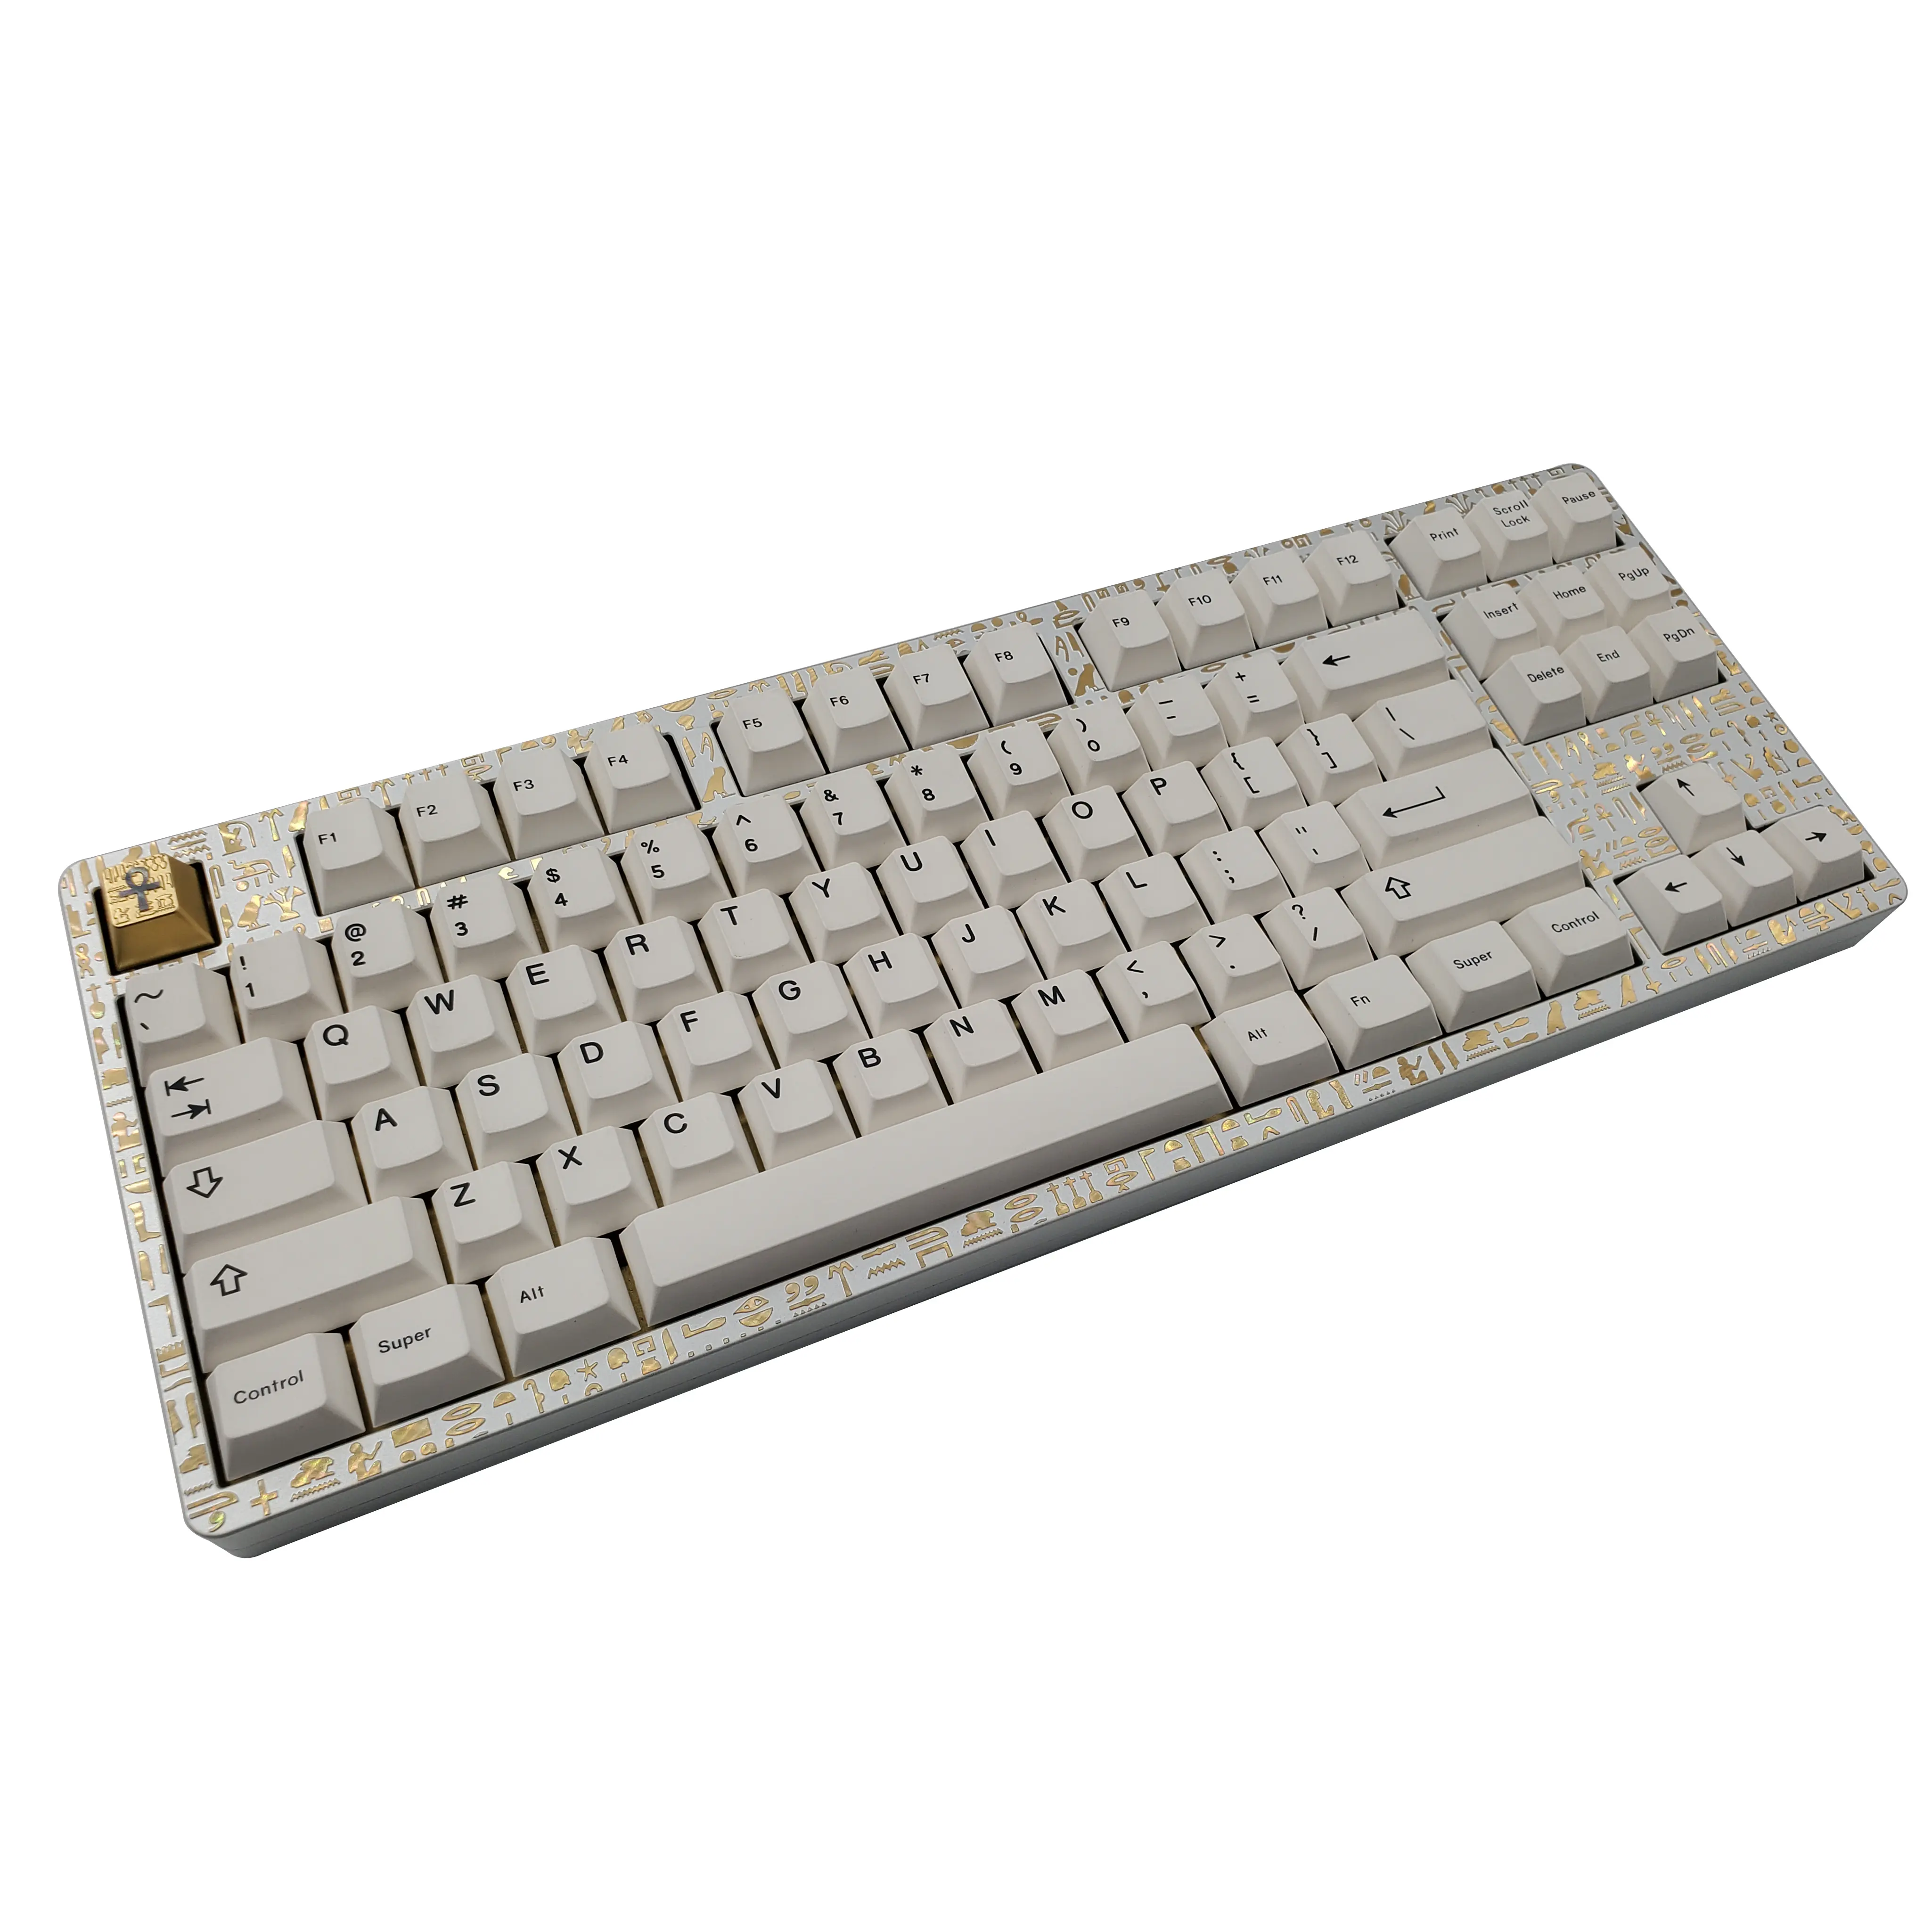 OEM custom keyboard case keyboard keycaps Aluminum Cnc mechanical gaming keyboard